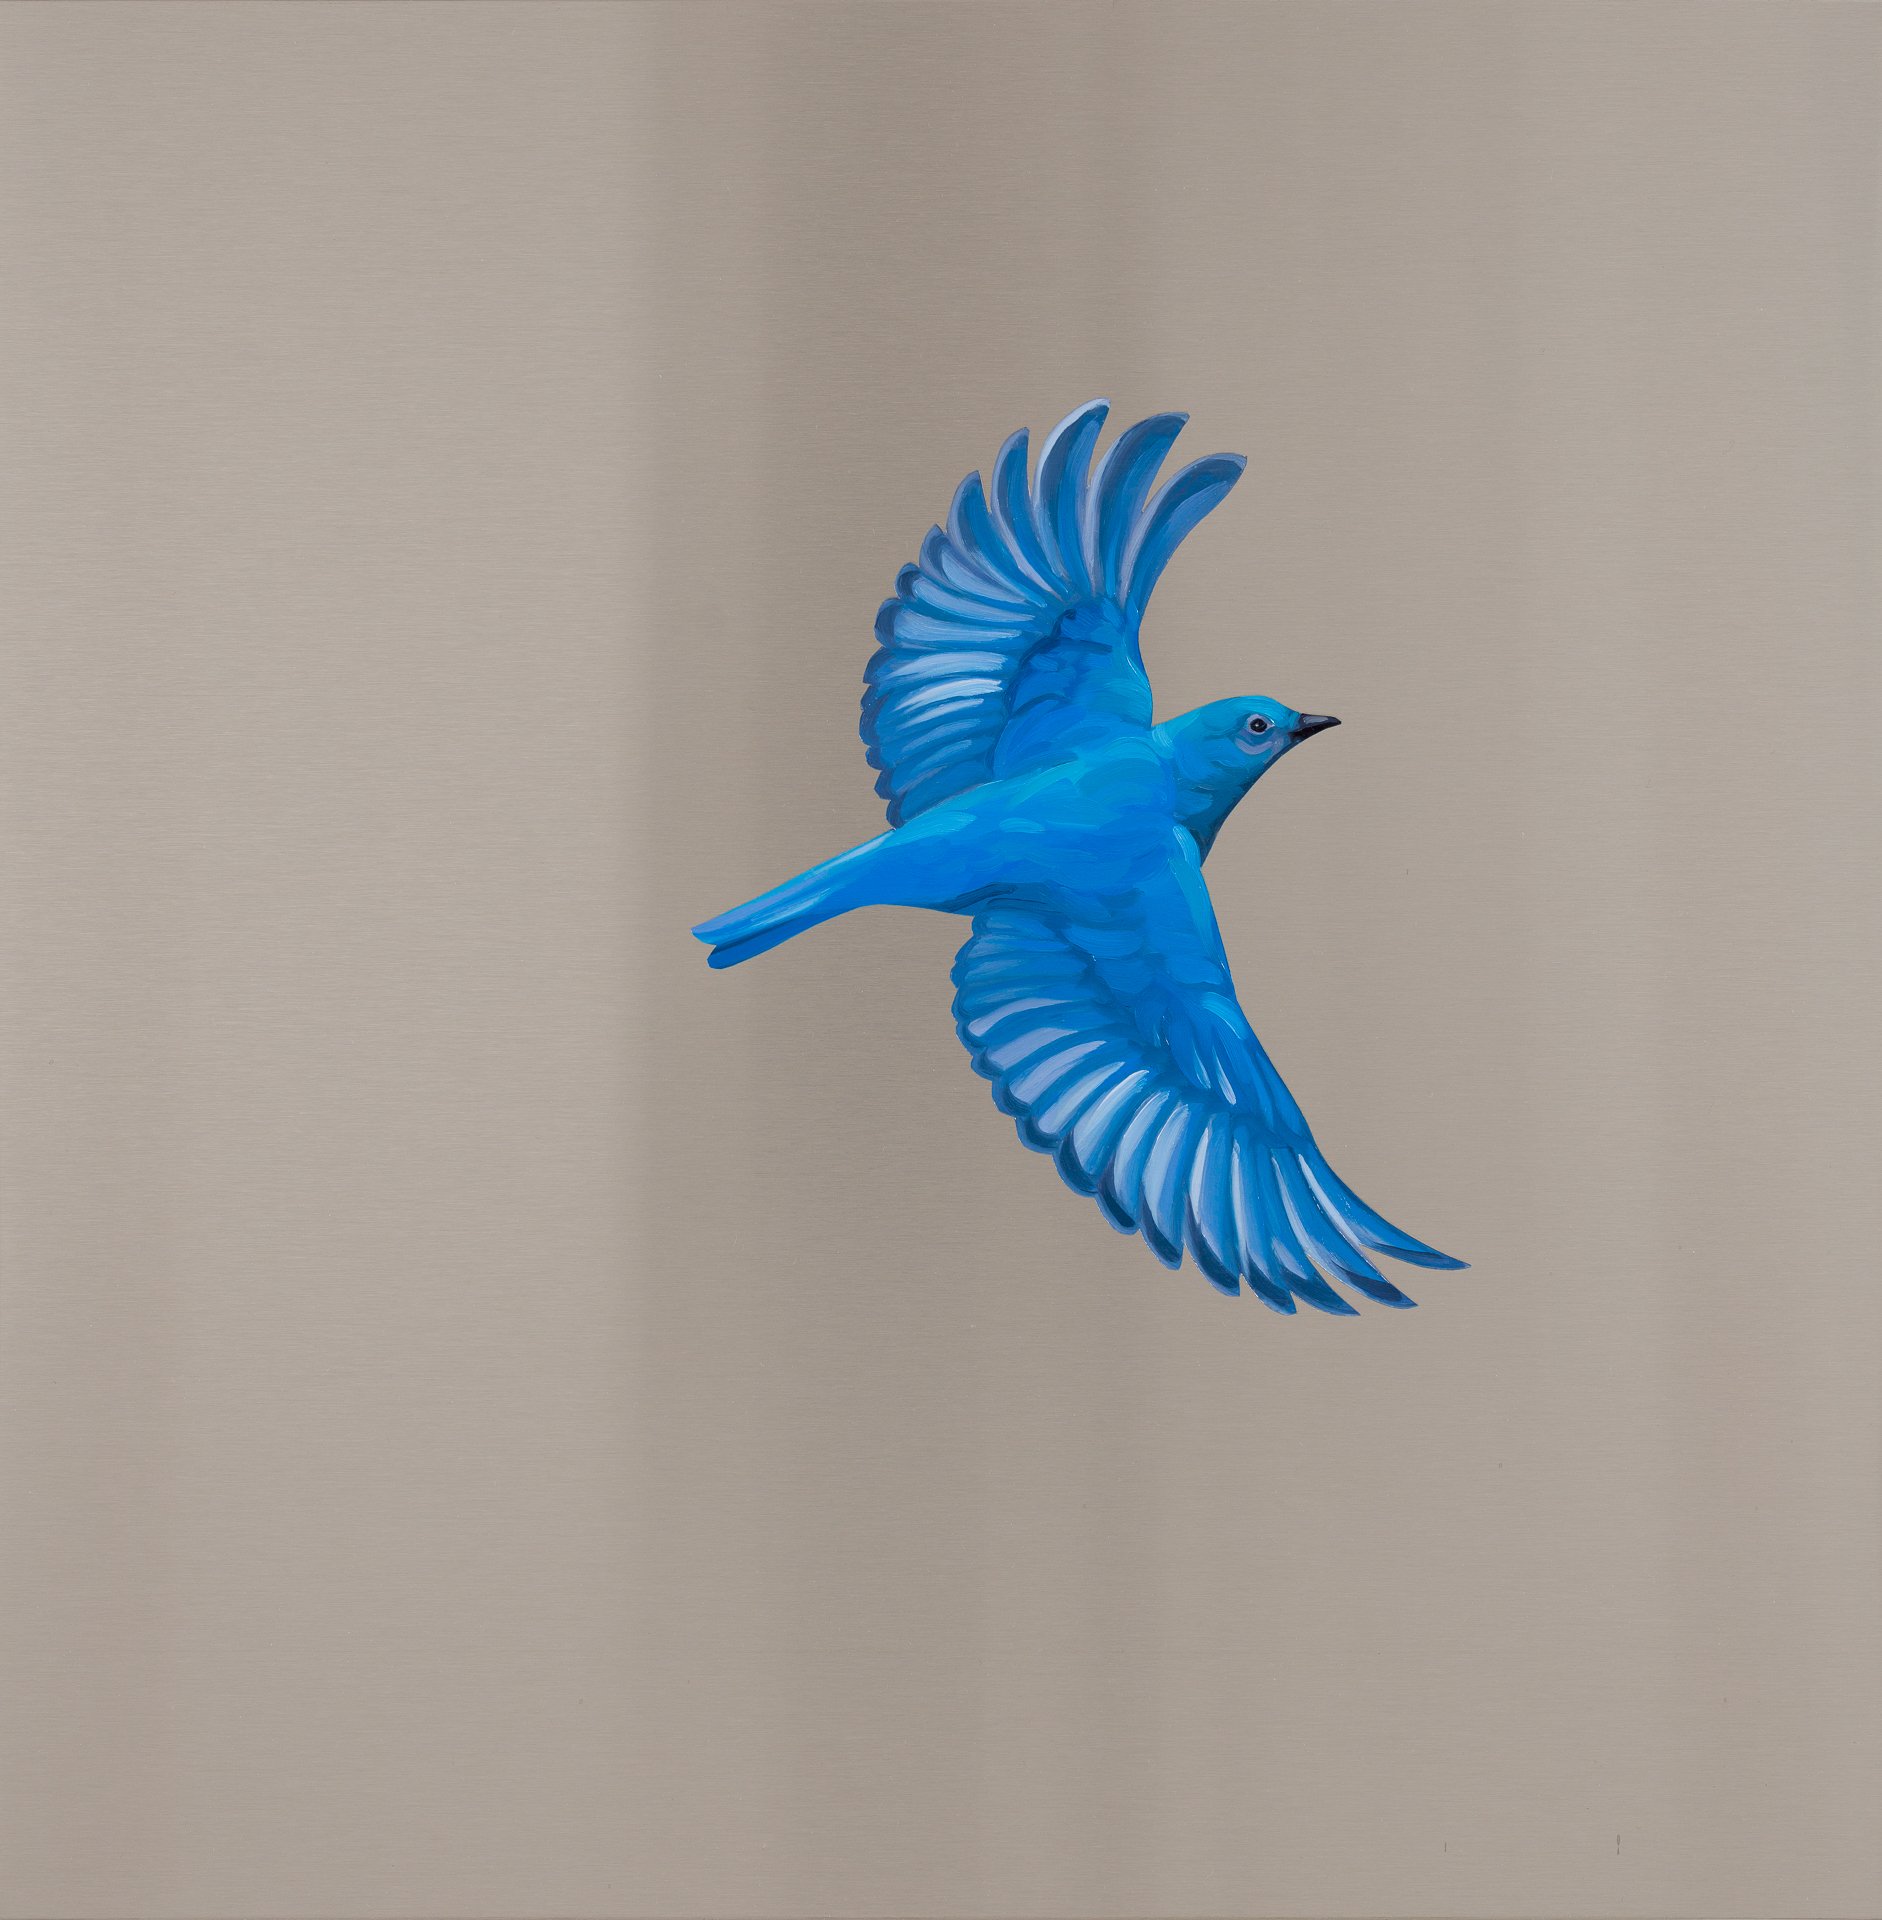  Mountain Bluebird. Oil on stainless steel, 18in x 18in 